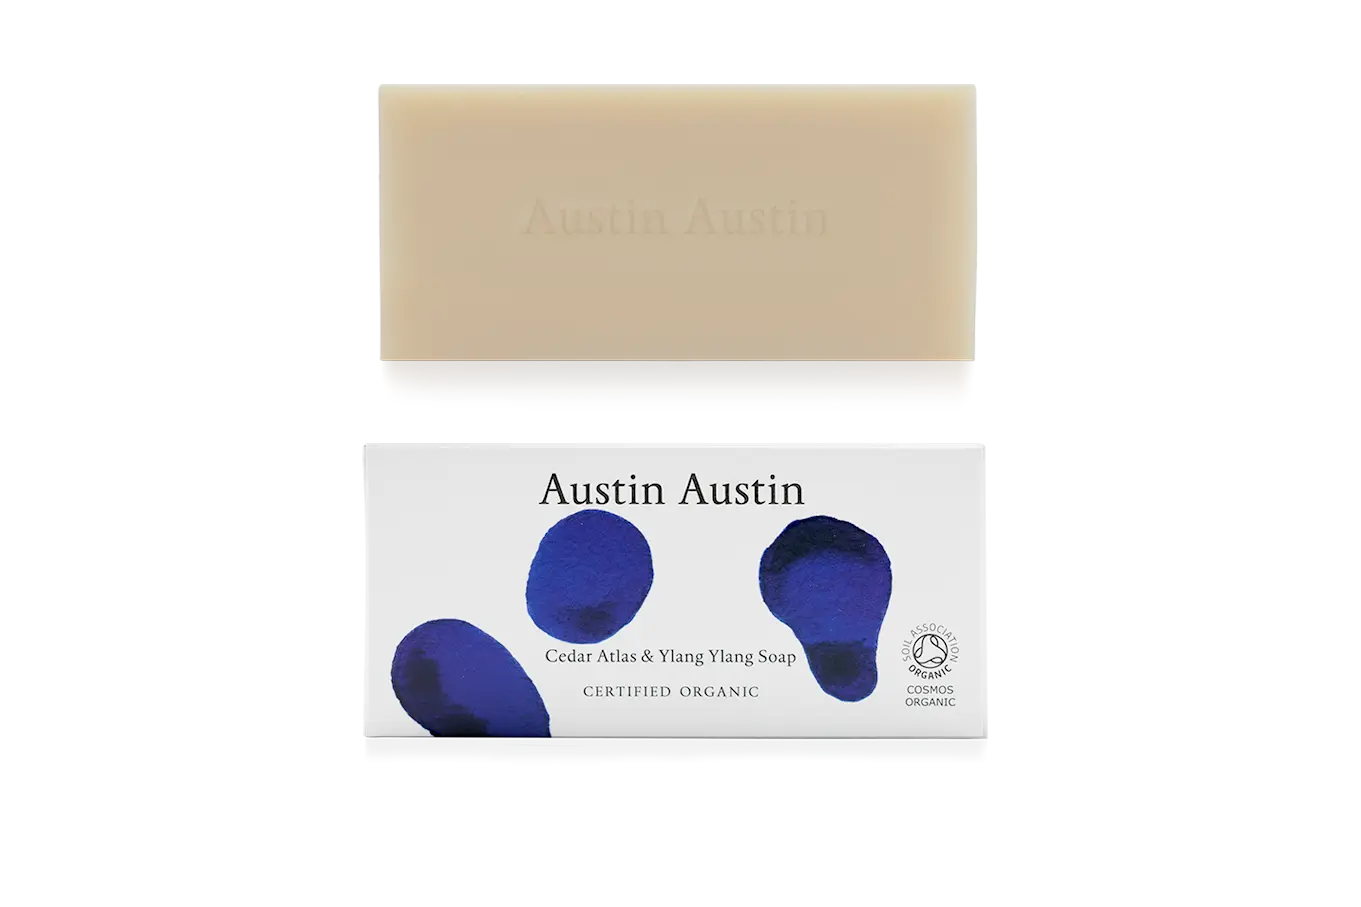 Cedar Atlas & Ylang Ylang Soap Bar Organic, Austin Austin Collaboration, Matthew Raw Ceramics  Austin Austin   